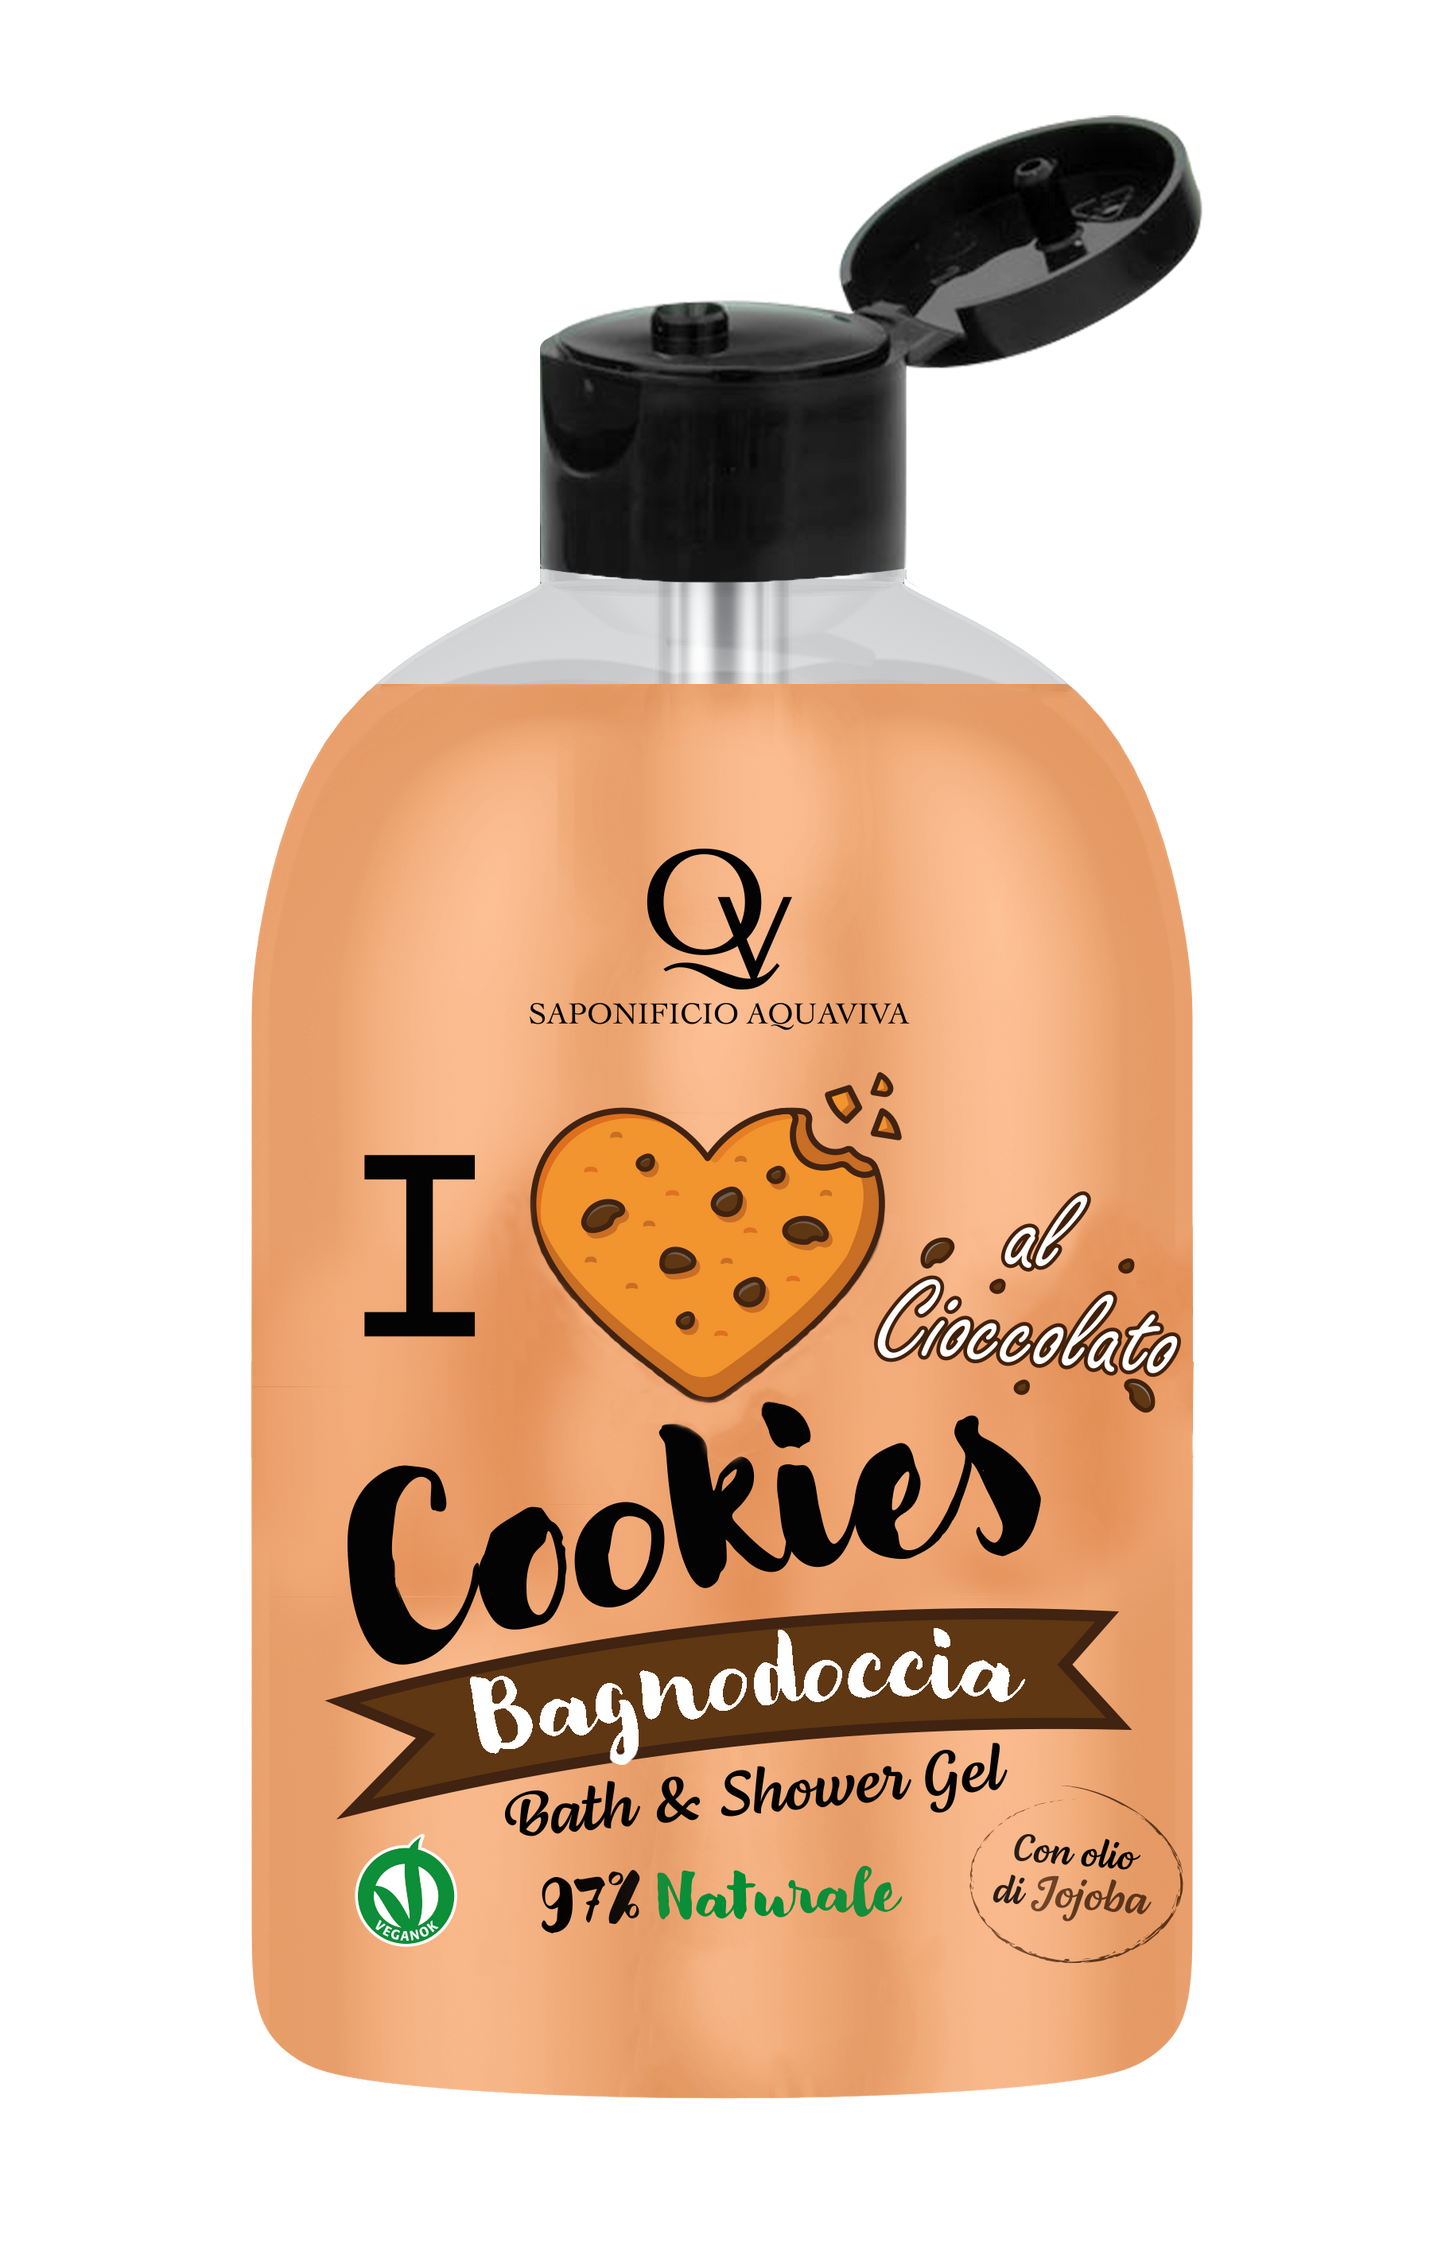 Bagnodoccia: Cookies al Cioccolato 100% Vegan Saponificio Aquaviva